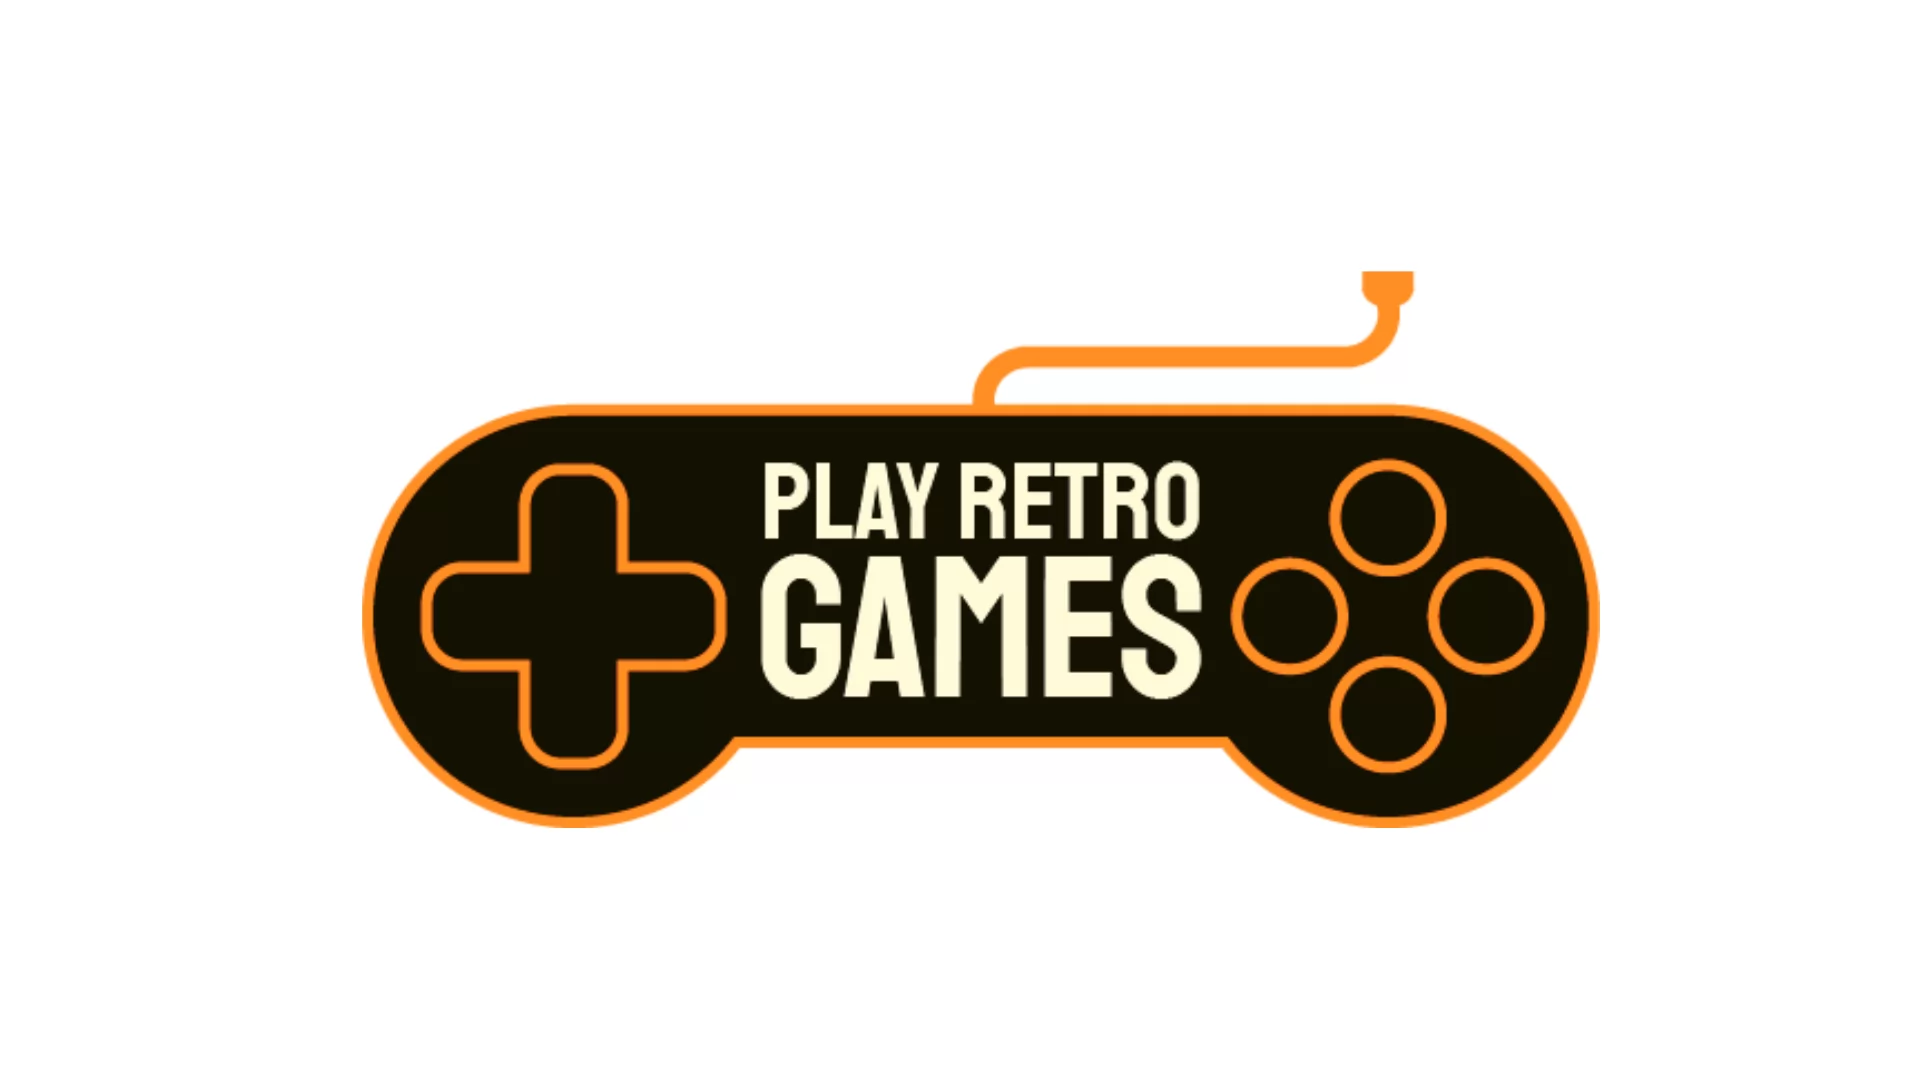 Play Retro Games